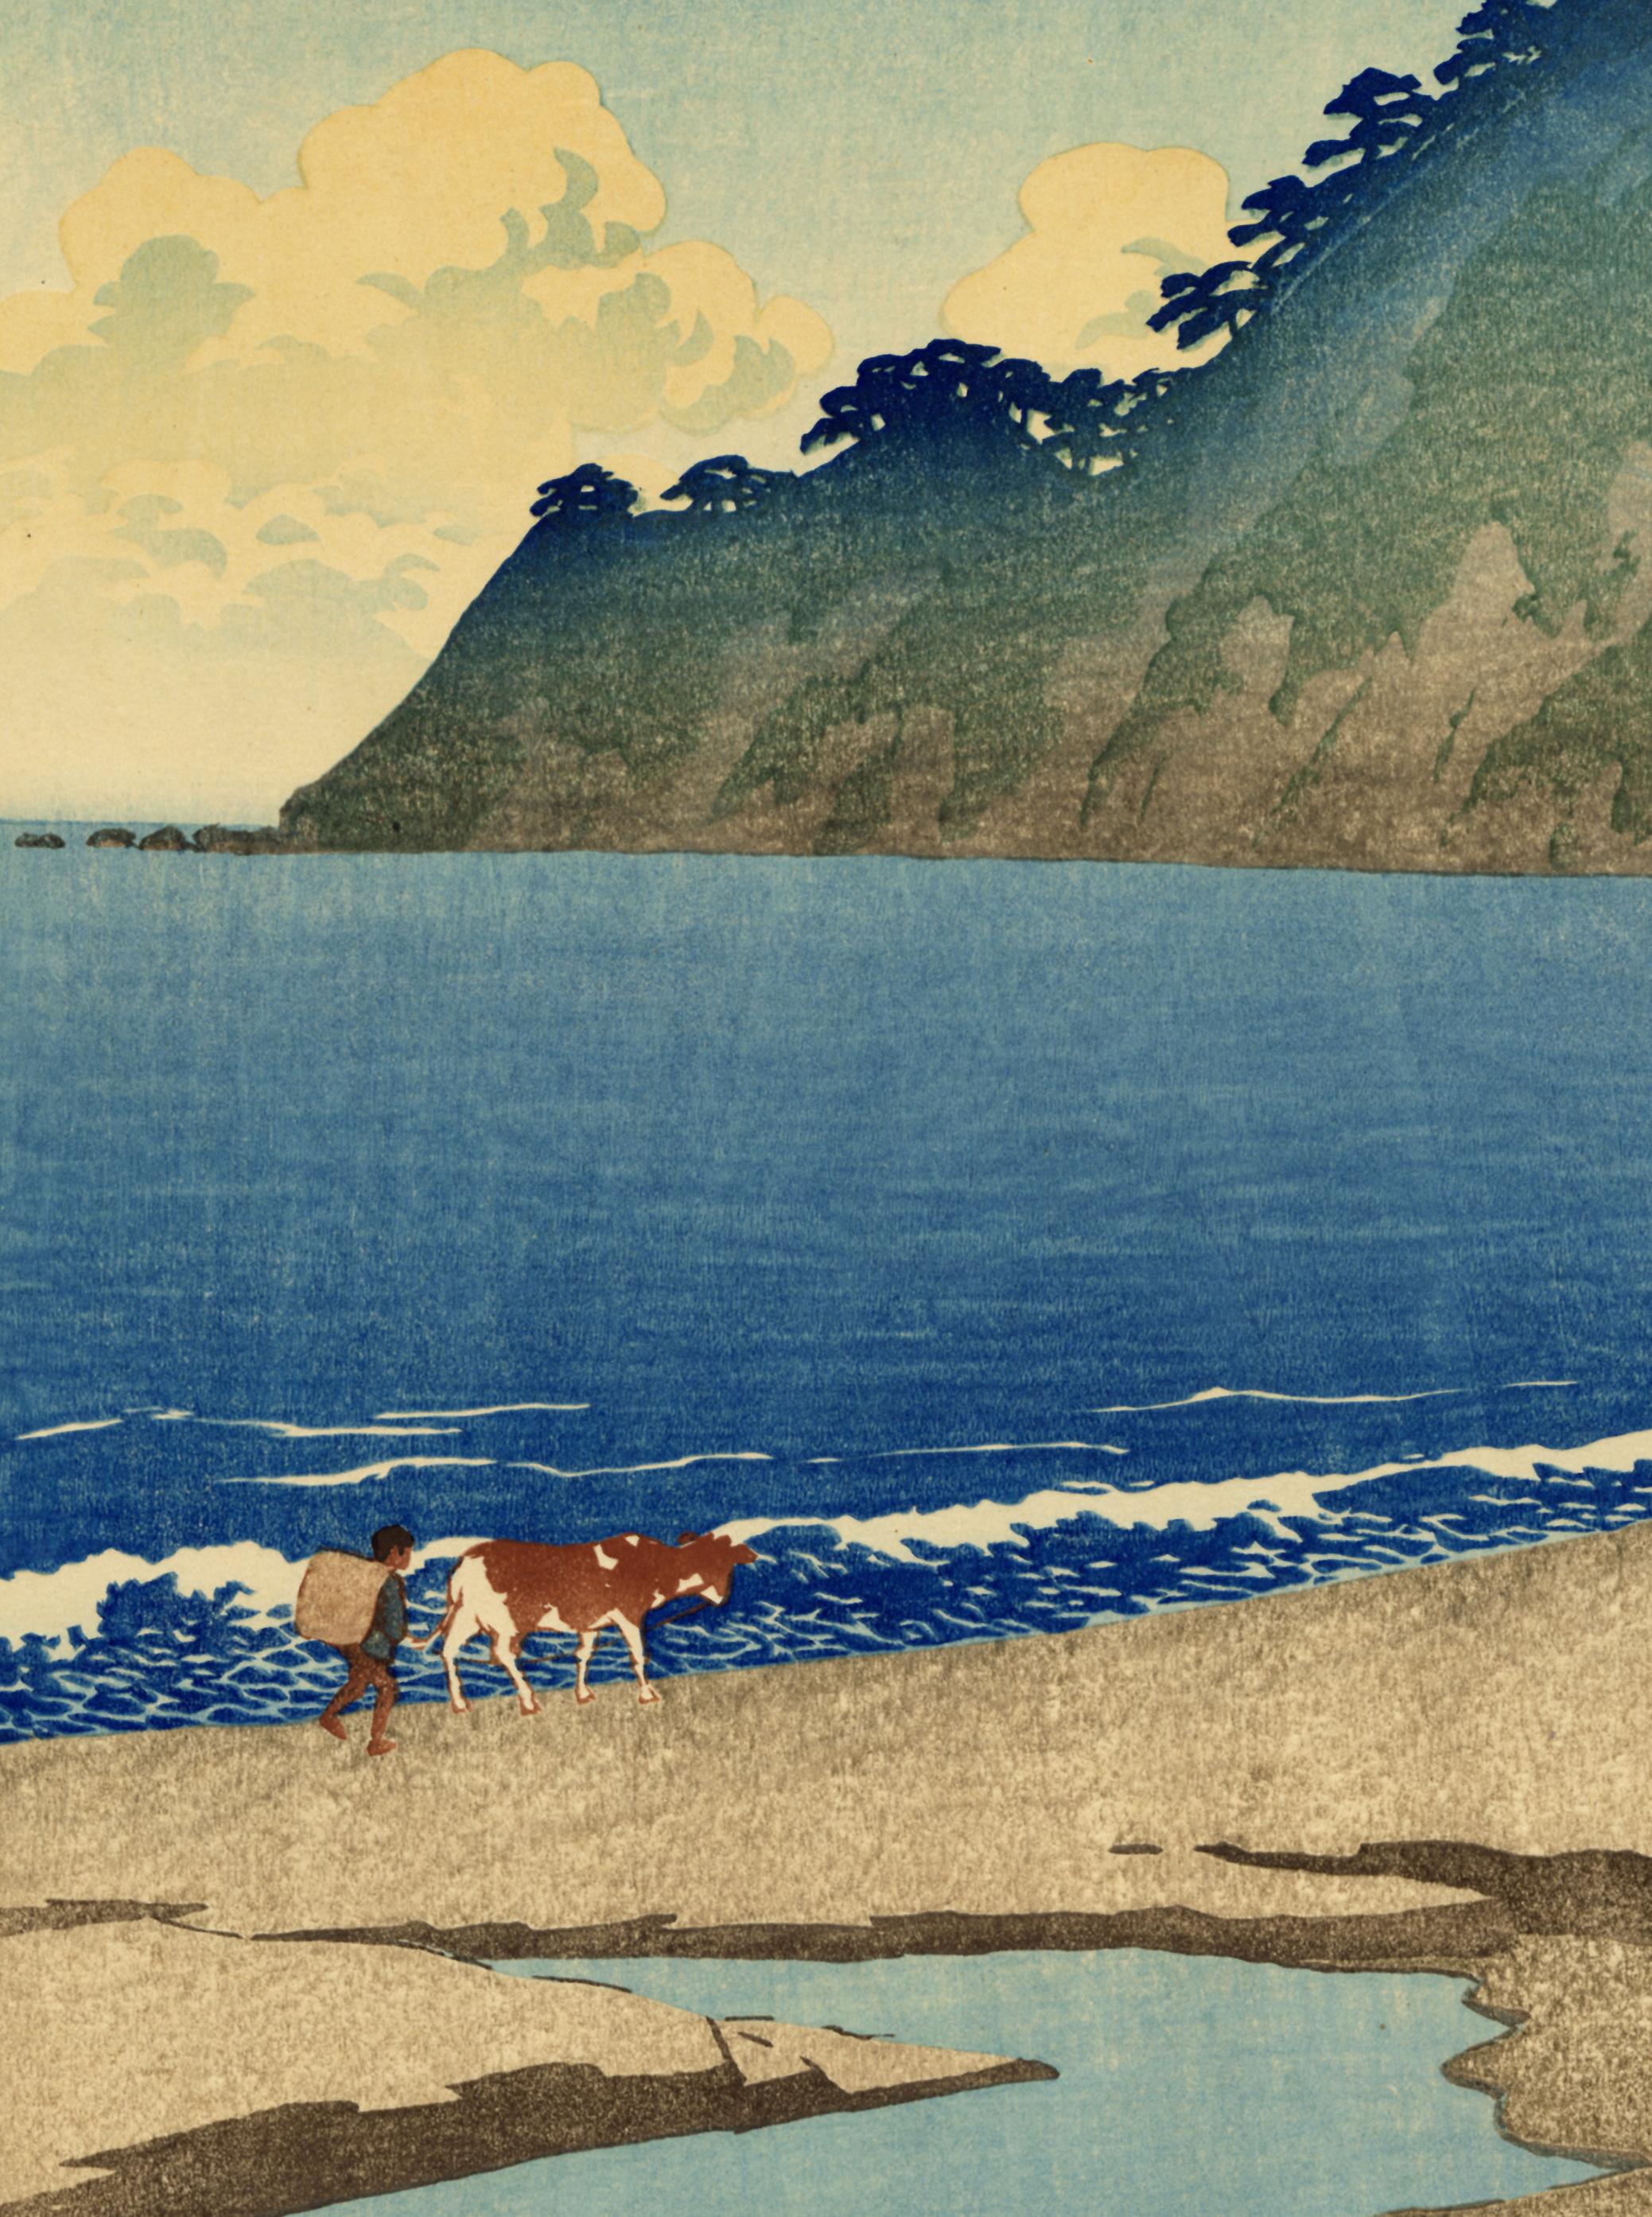 Iwai Seashore in Boshu - Print by Kawase Hasui